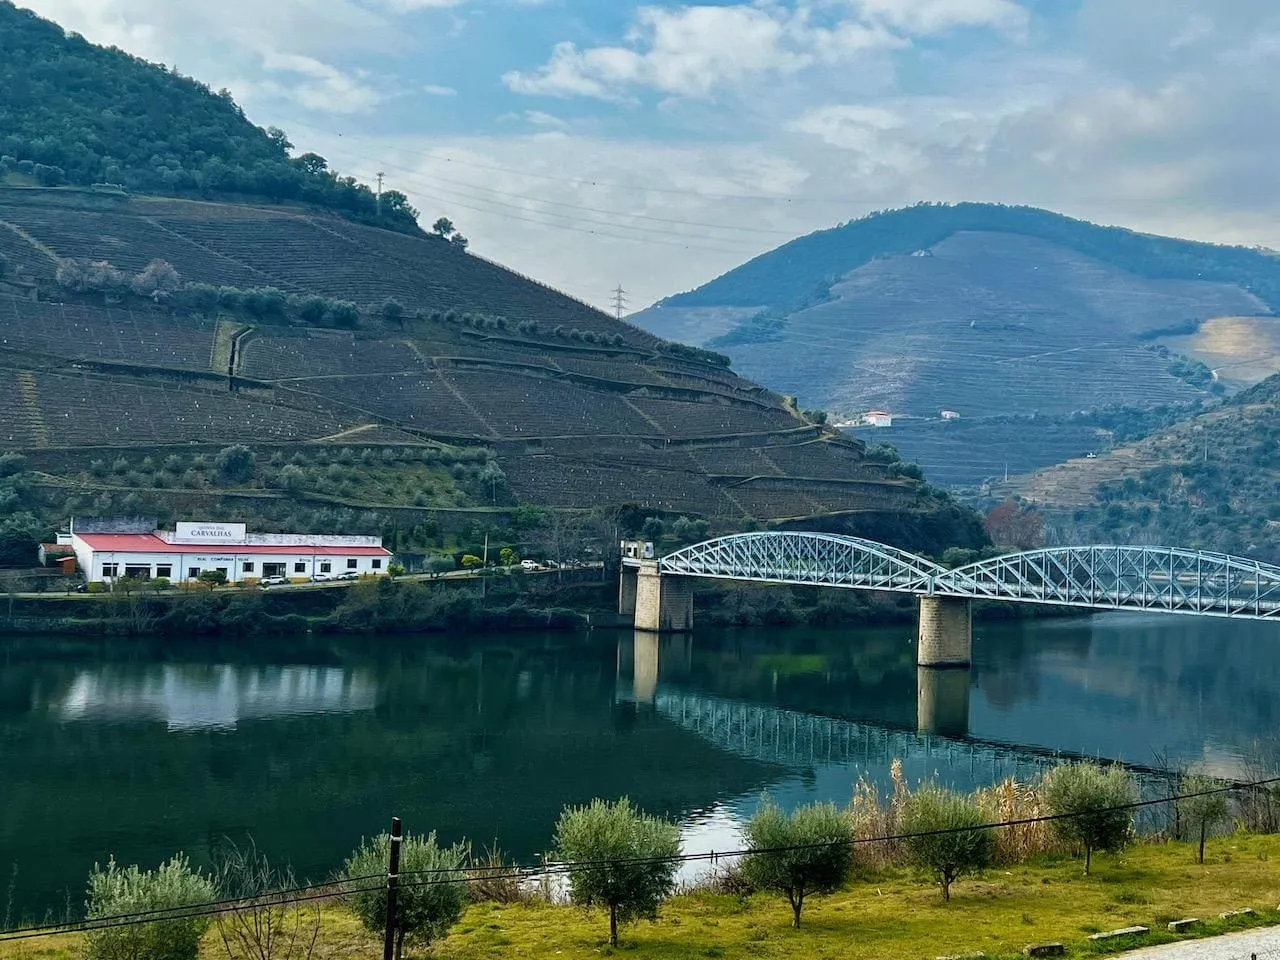 douro valley tour from lisbon